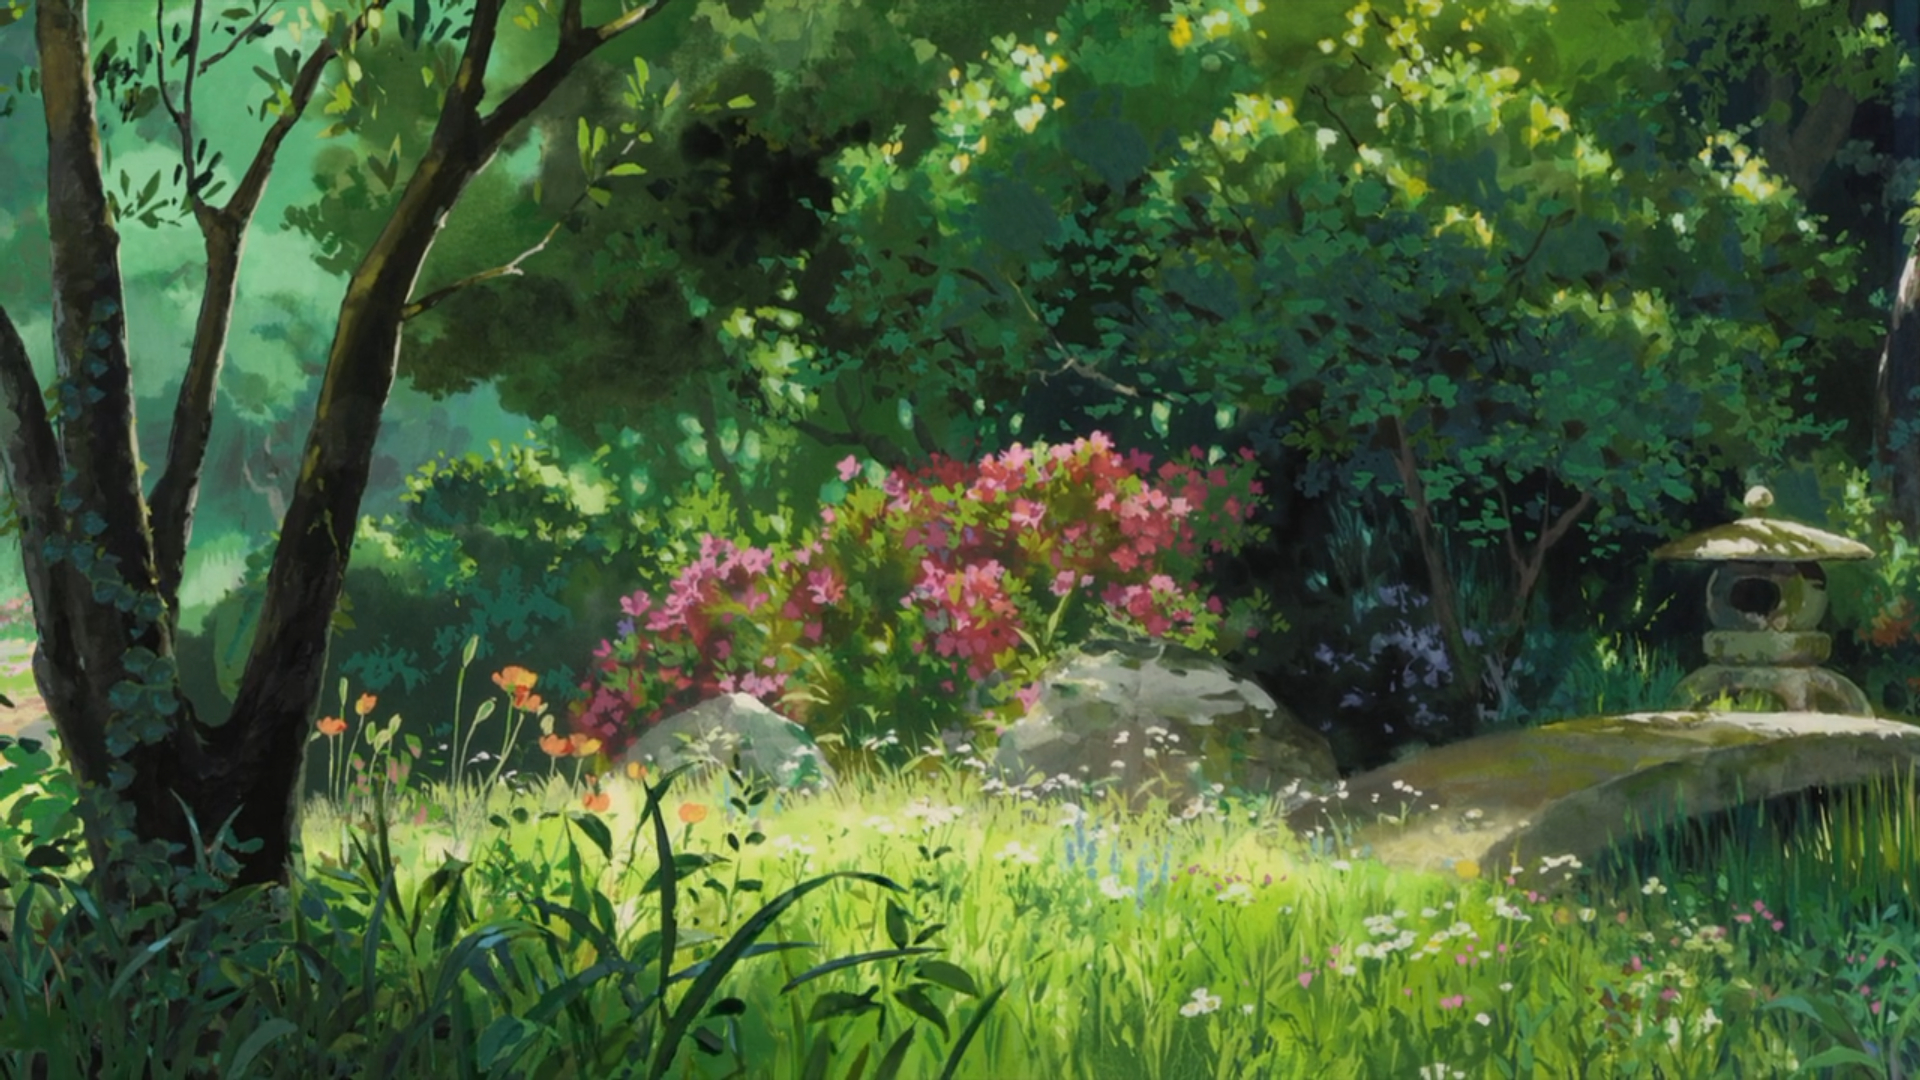 1920x1080 Pin by Damir Saifutdinow on Studio Ghibli | Studio ghibli background, Anime scenery, Ghibli artwork